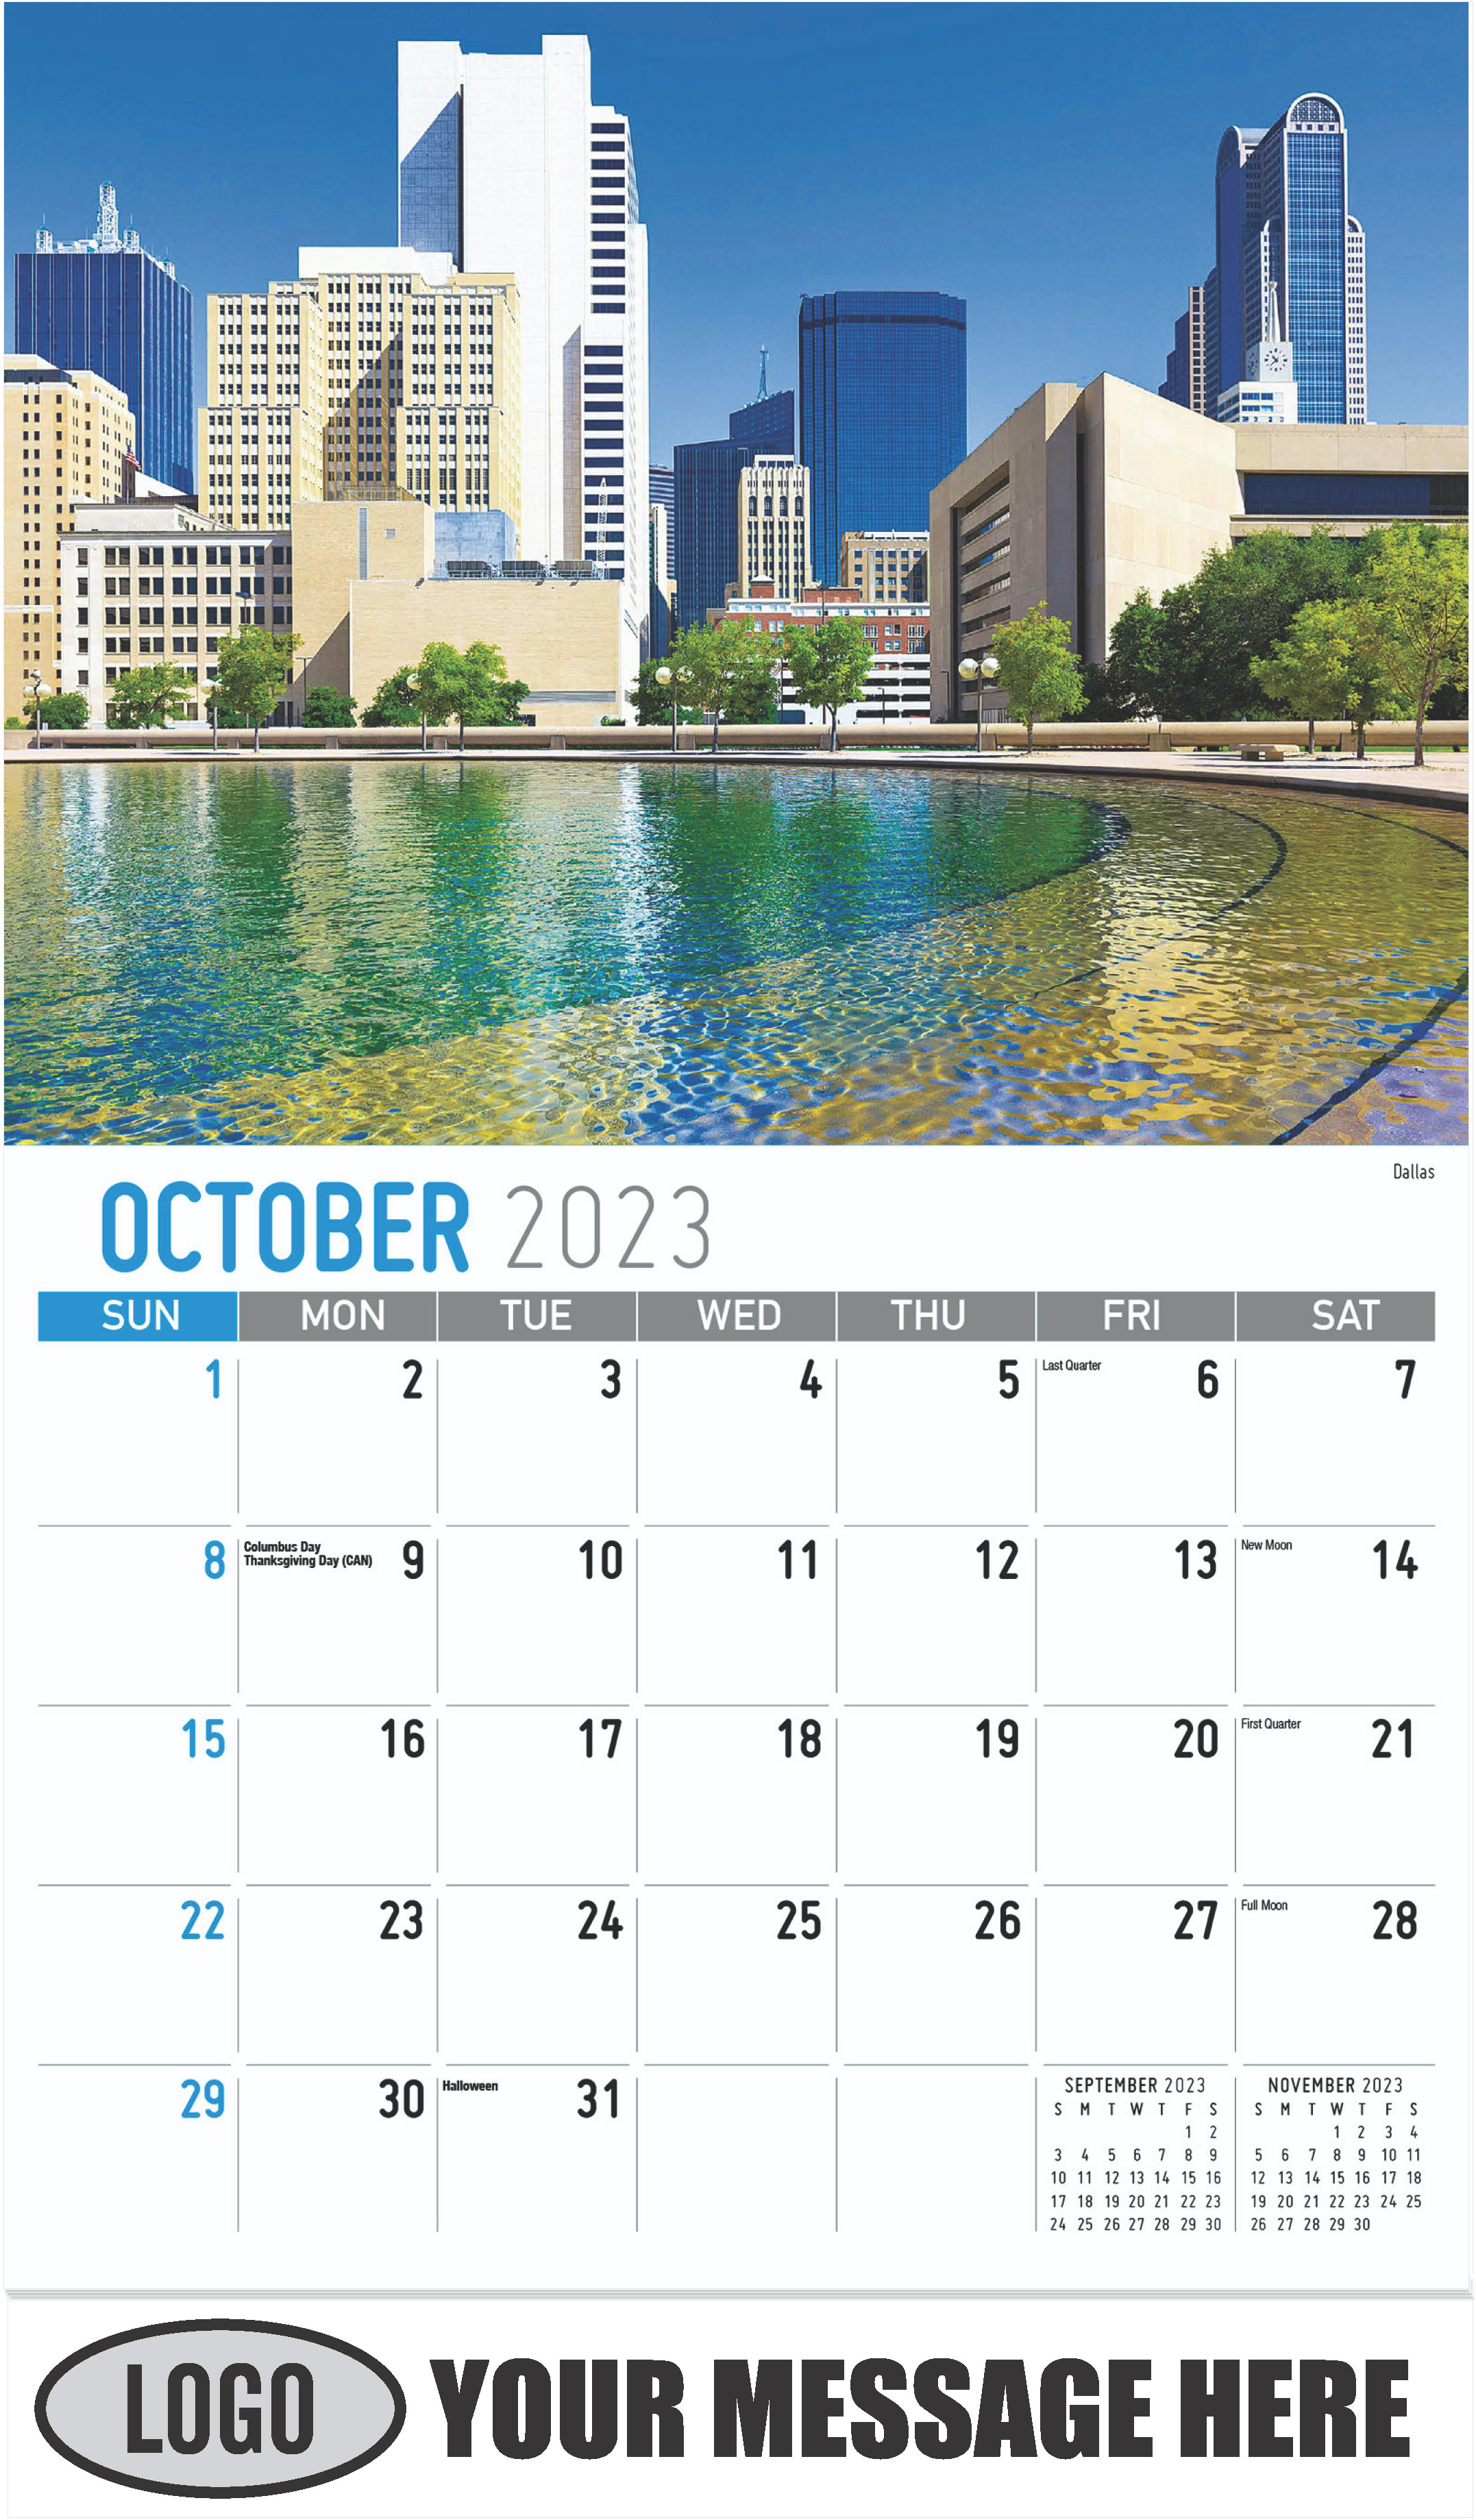 Dallas - October - Scenes of Texas 2023 Promotional Calendar